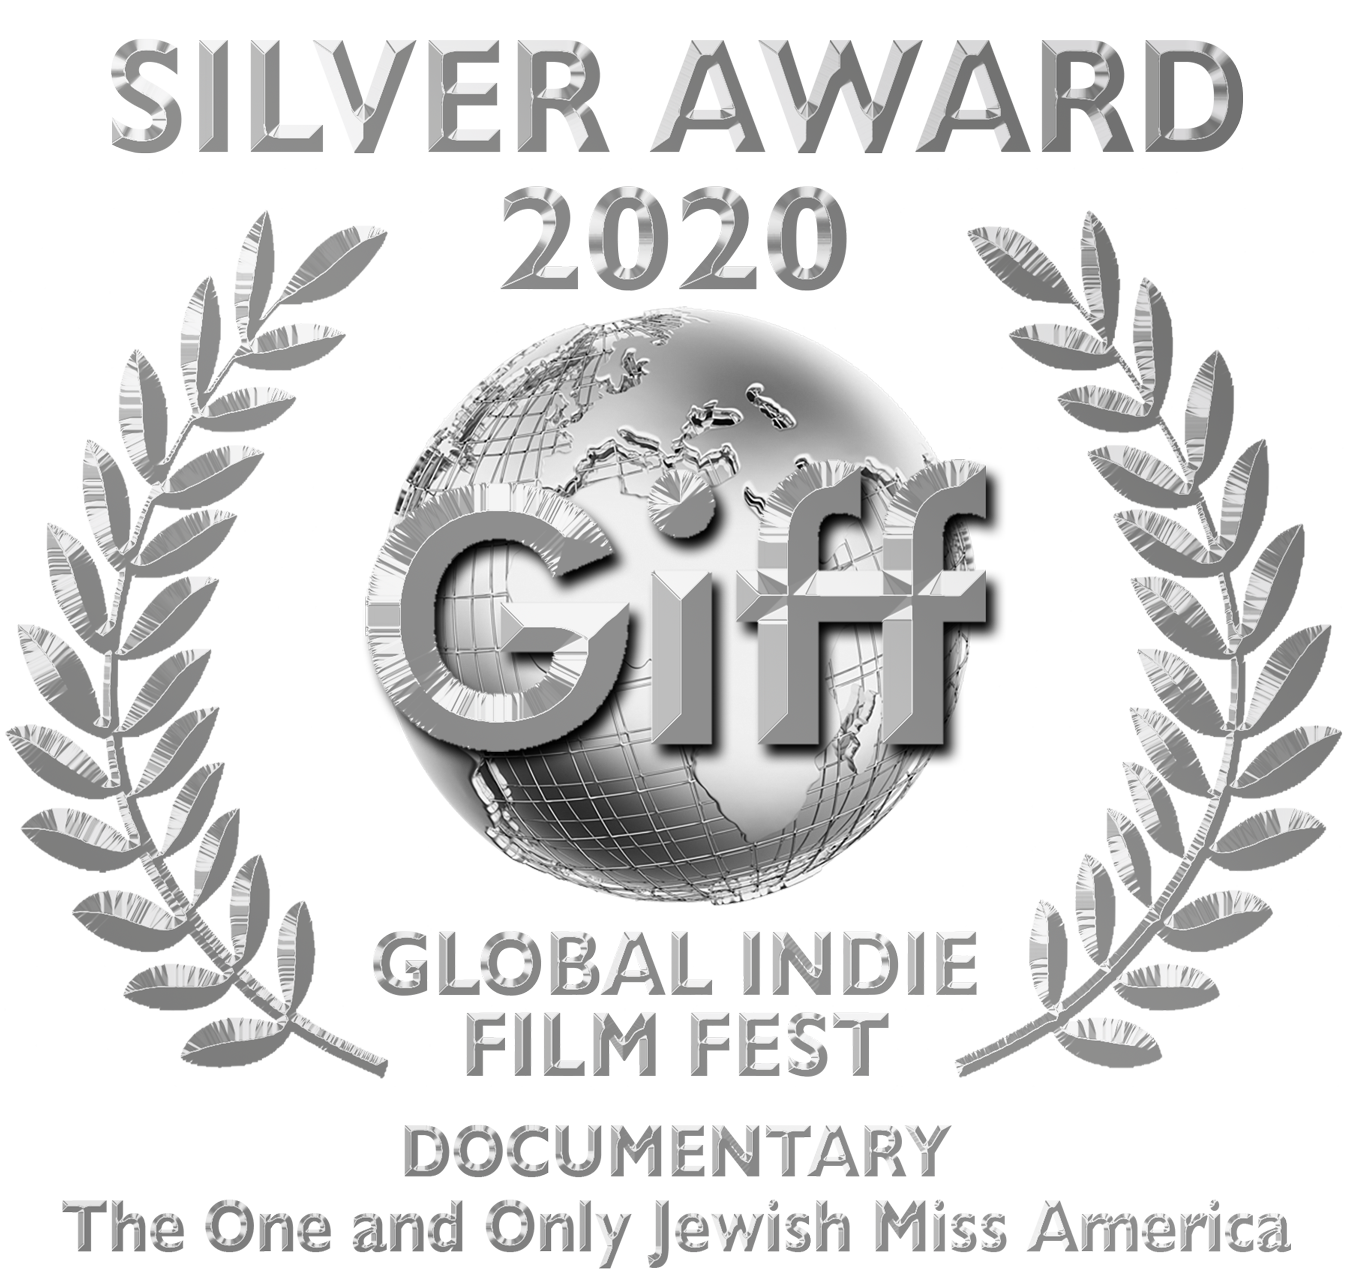 Giff Silver Award Documentary